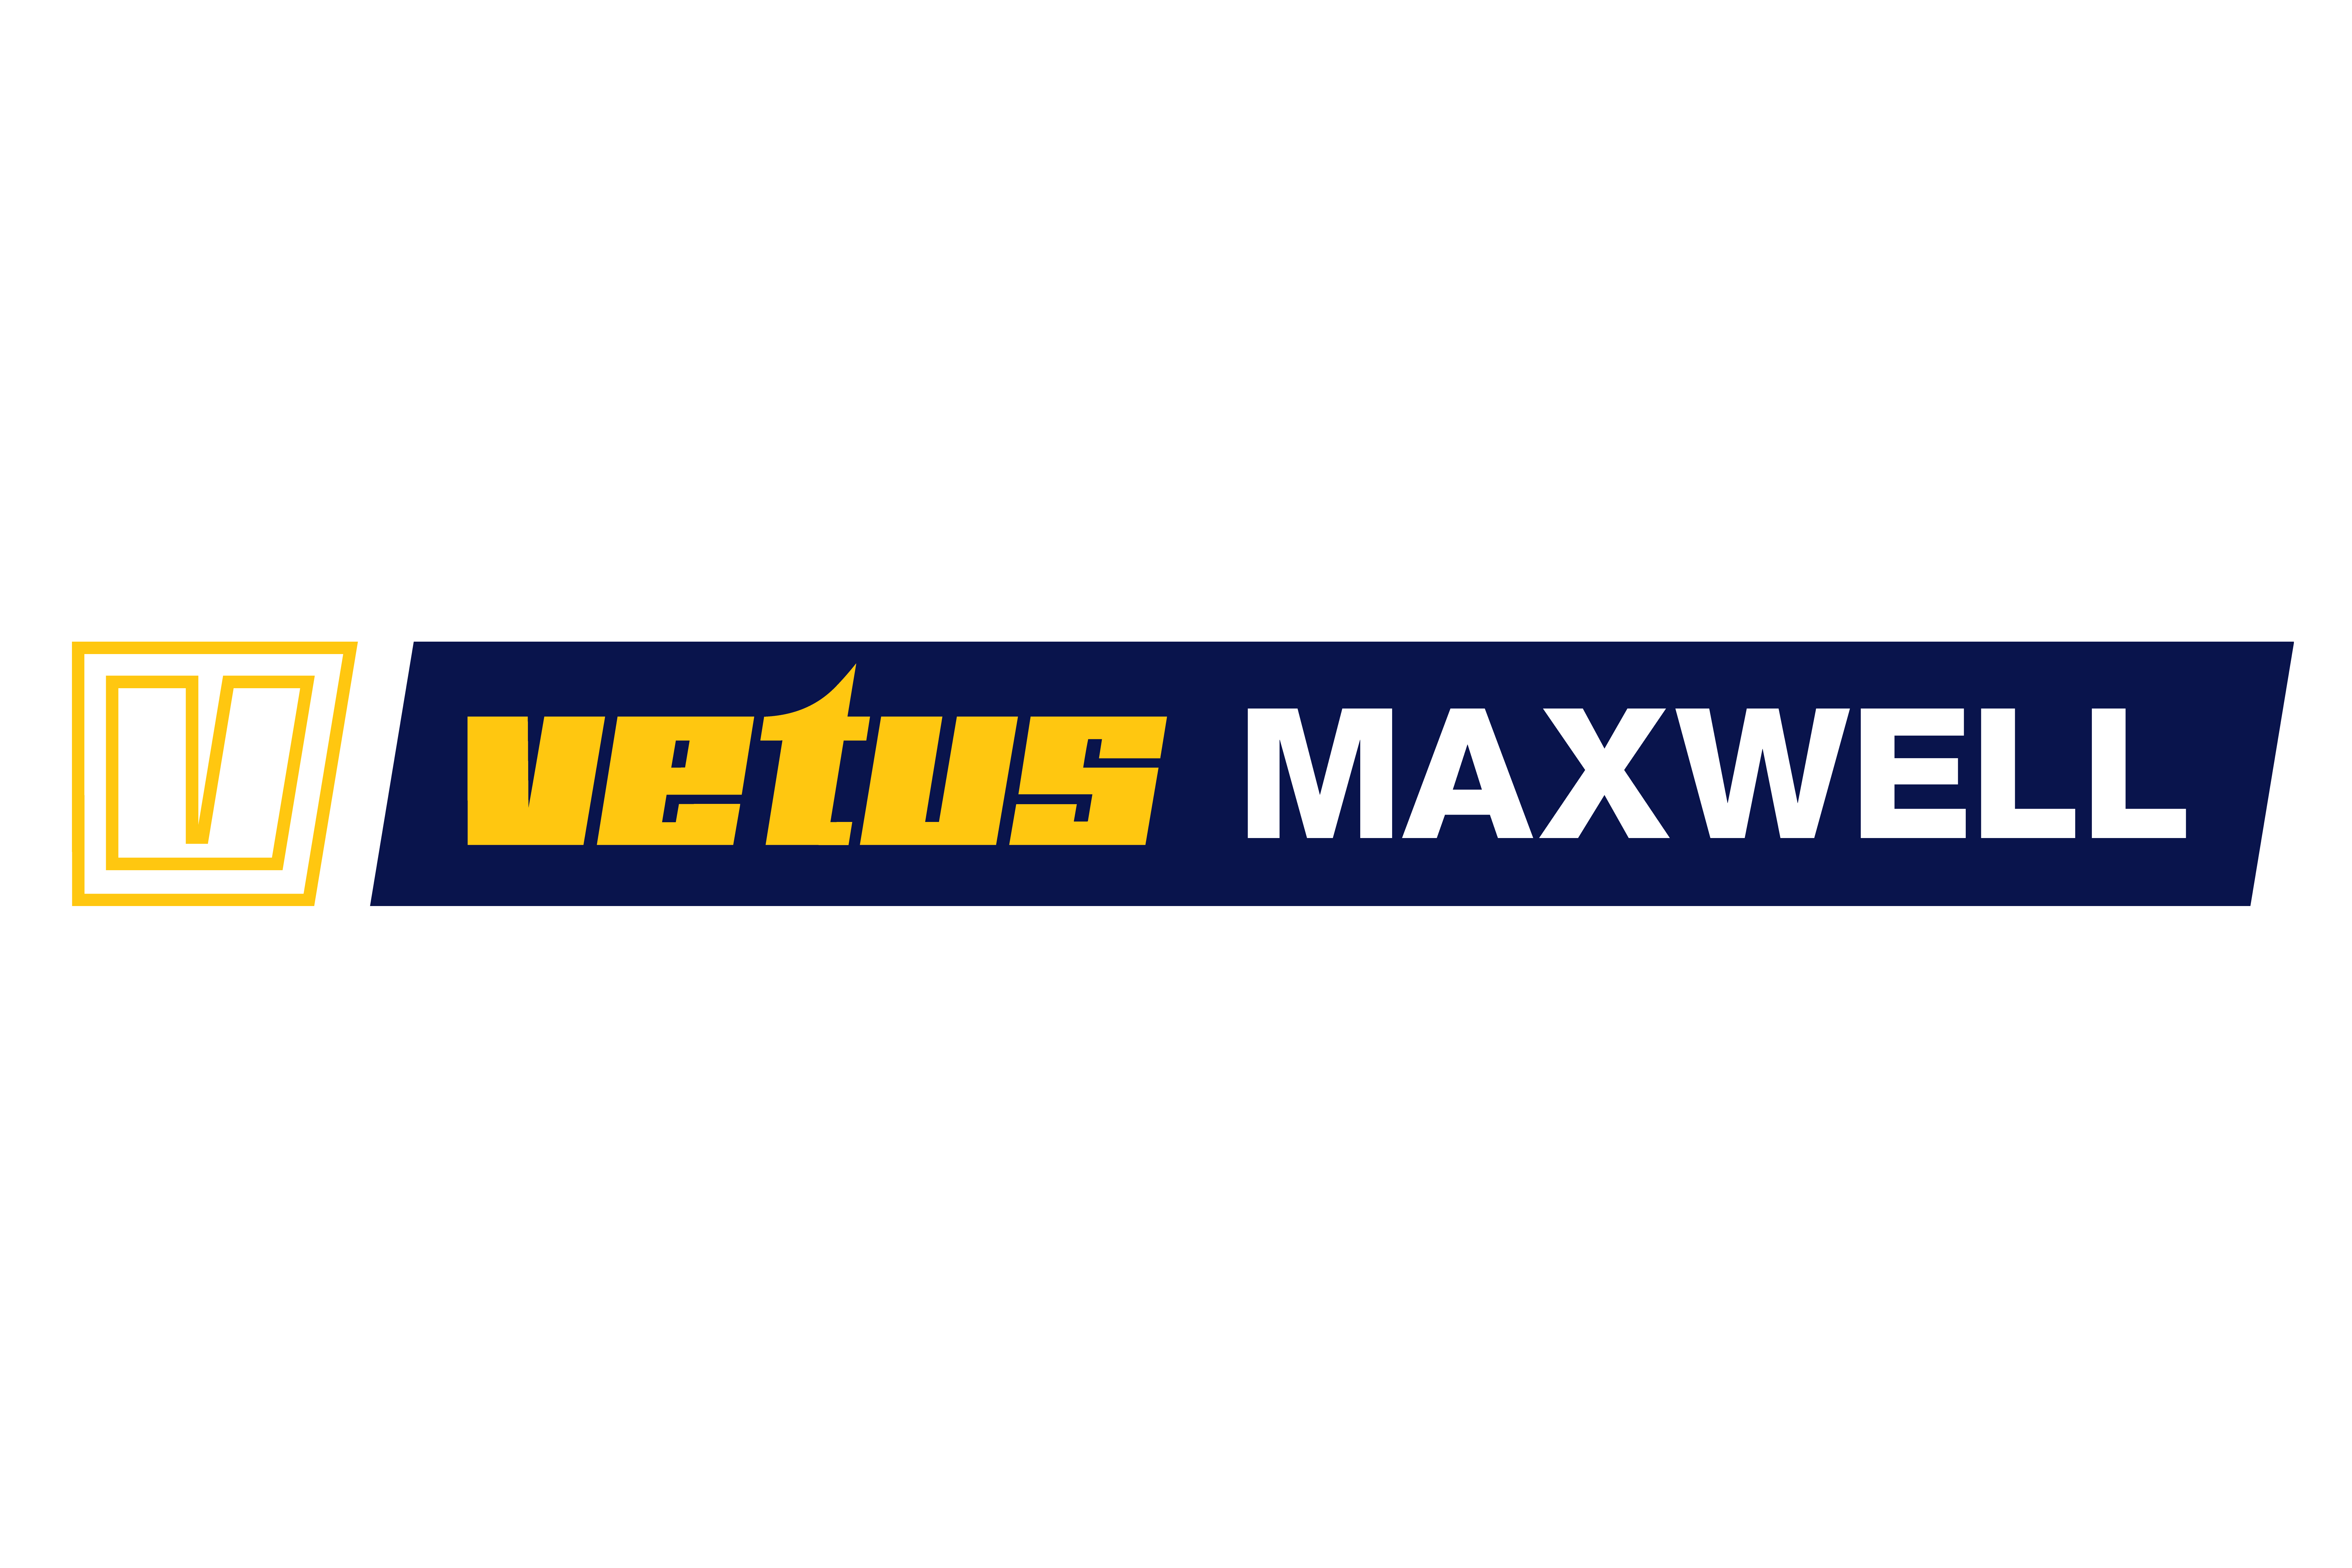 Vetus_Maxwell logo 4x6